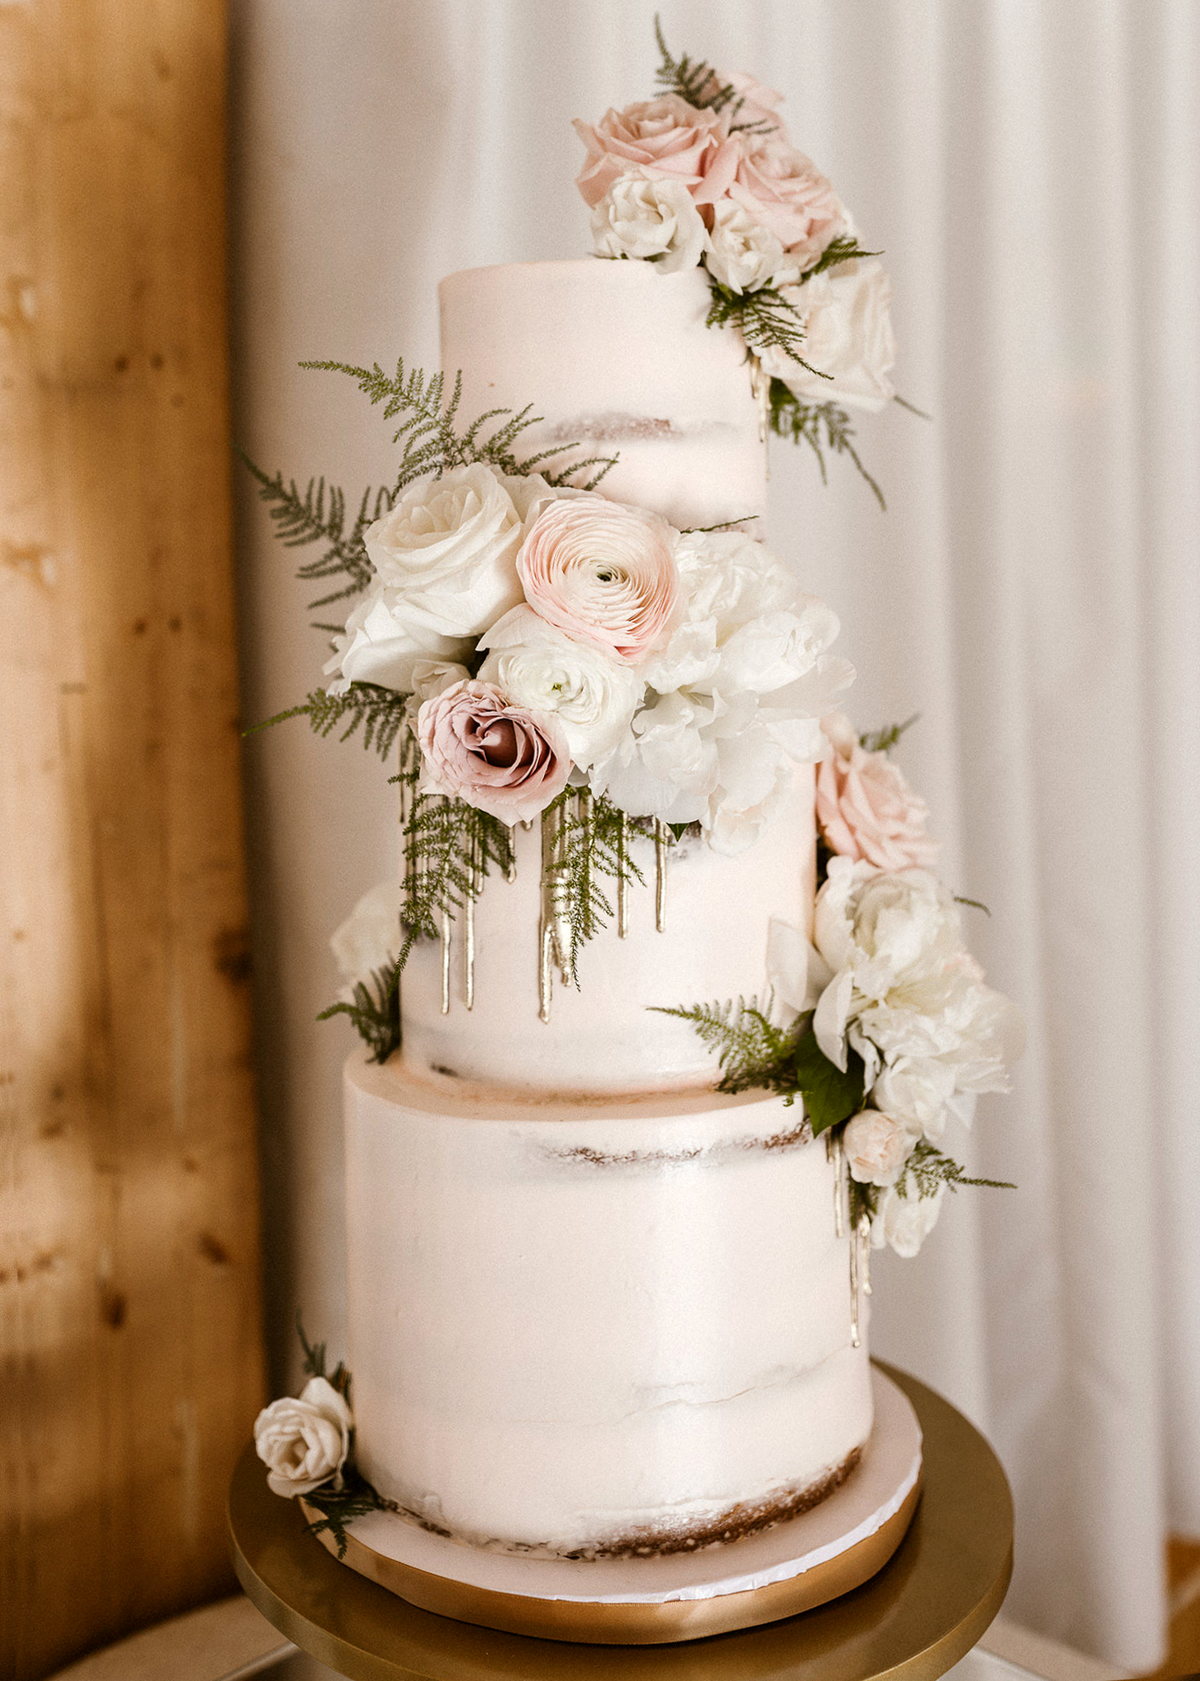 Calgary-Photographer-Tkshotz-61 - Whippt Wedding Cake